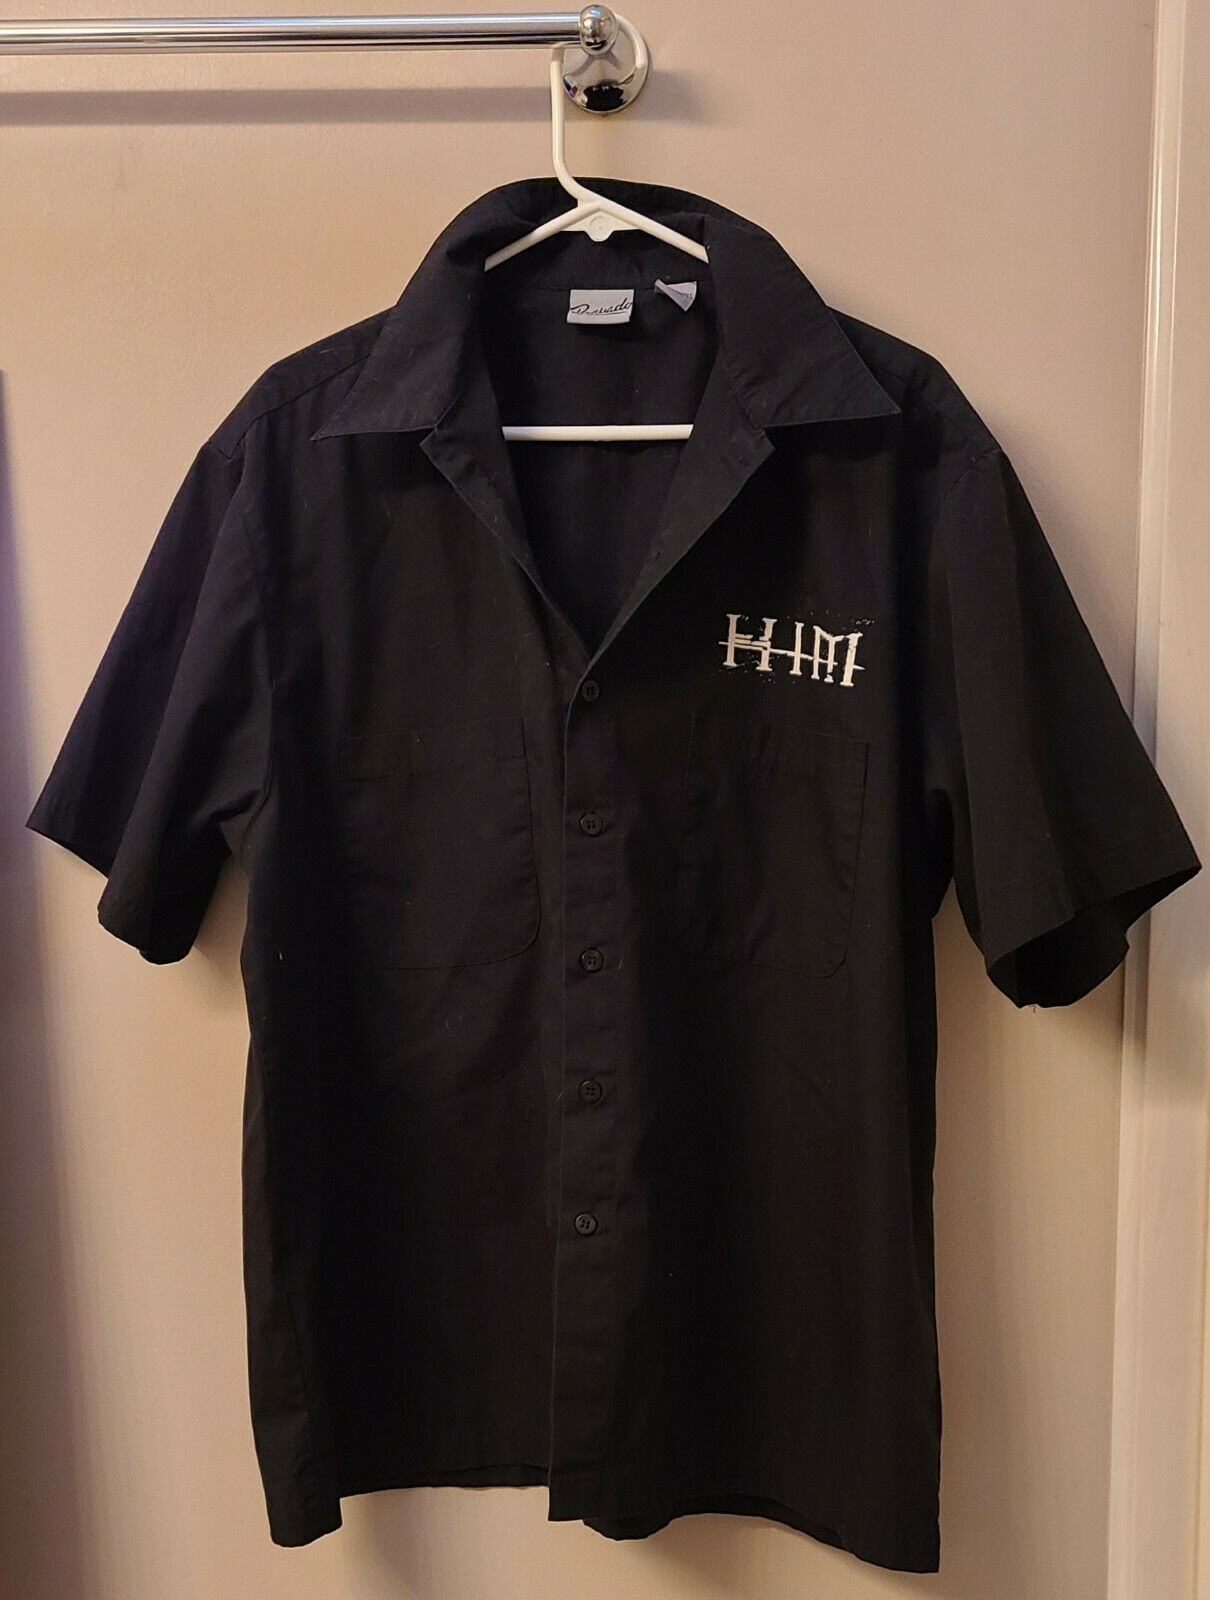 H.i.m. Him Heartagram Collared Button-down Short Sleeve Shirt Front Pocket Nwot